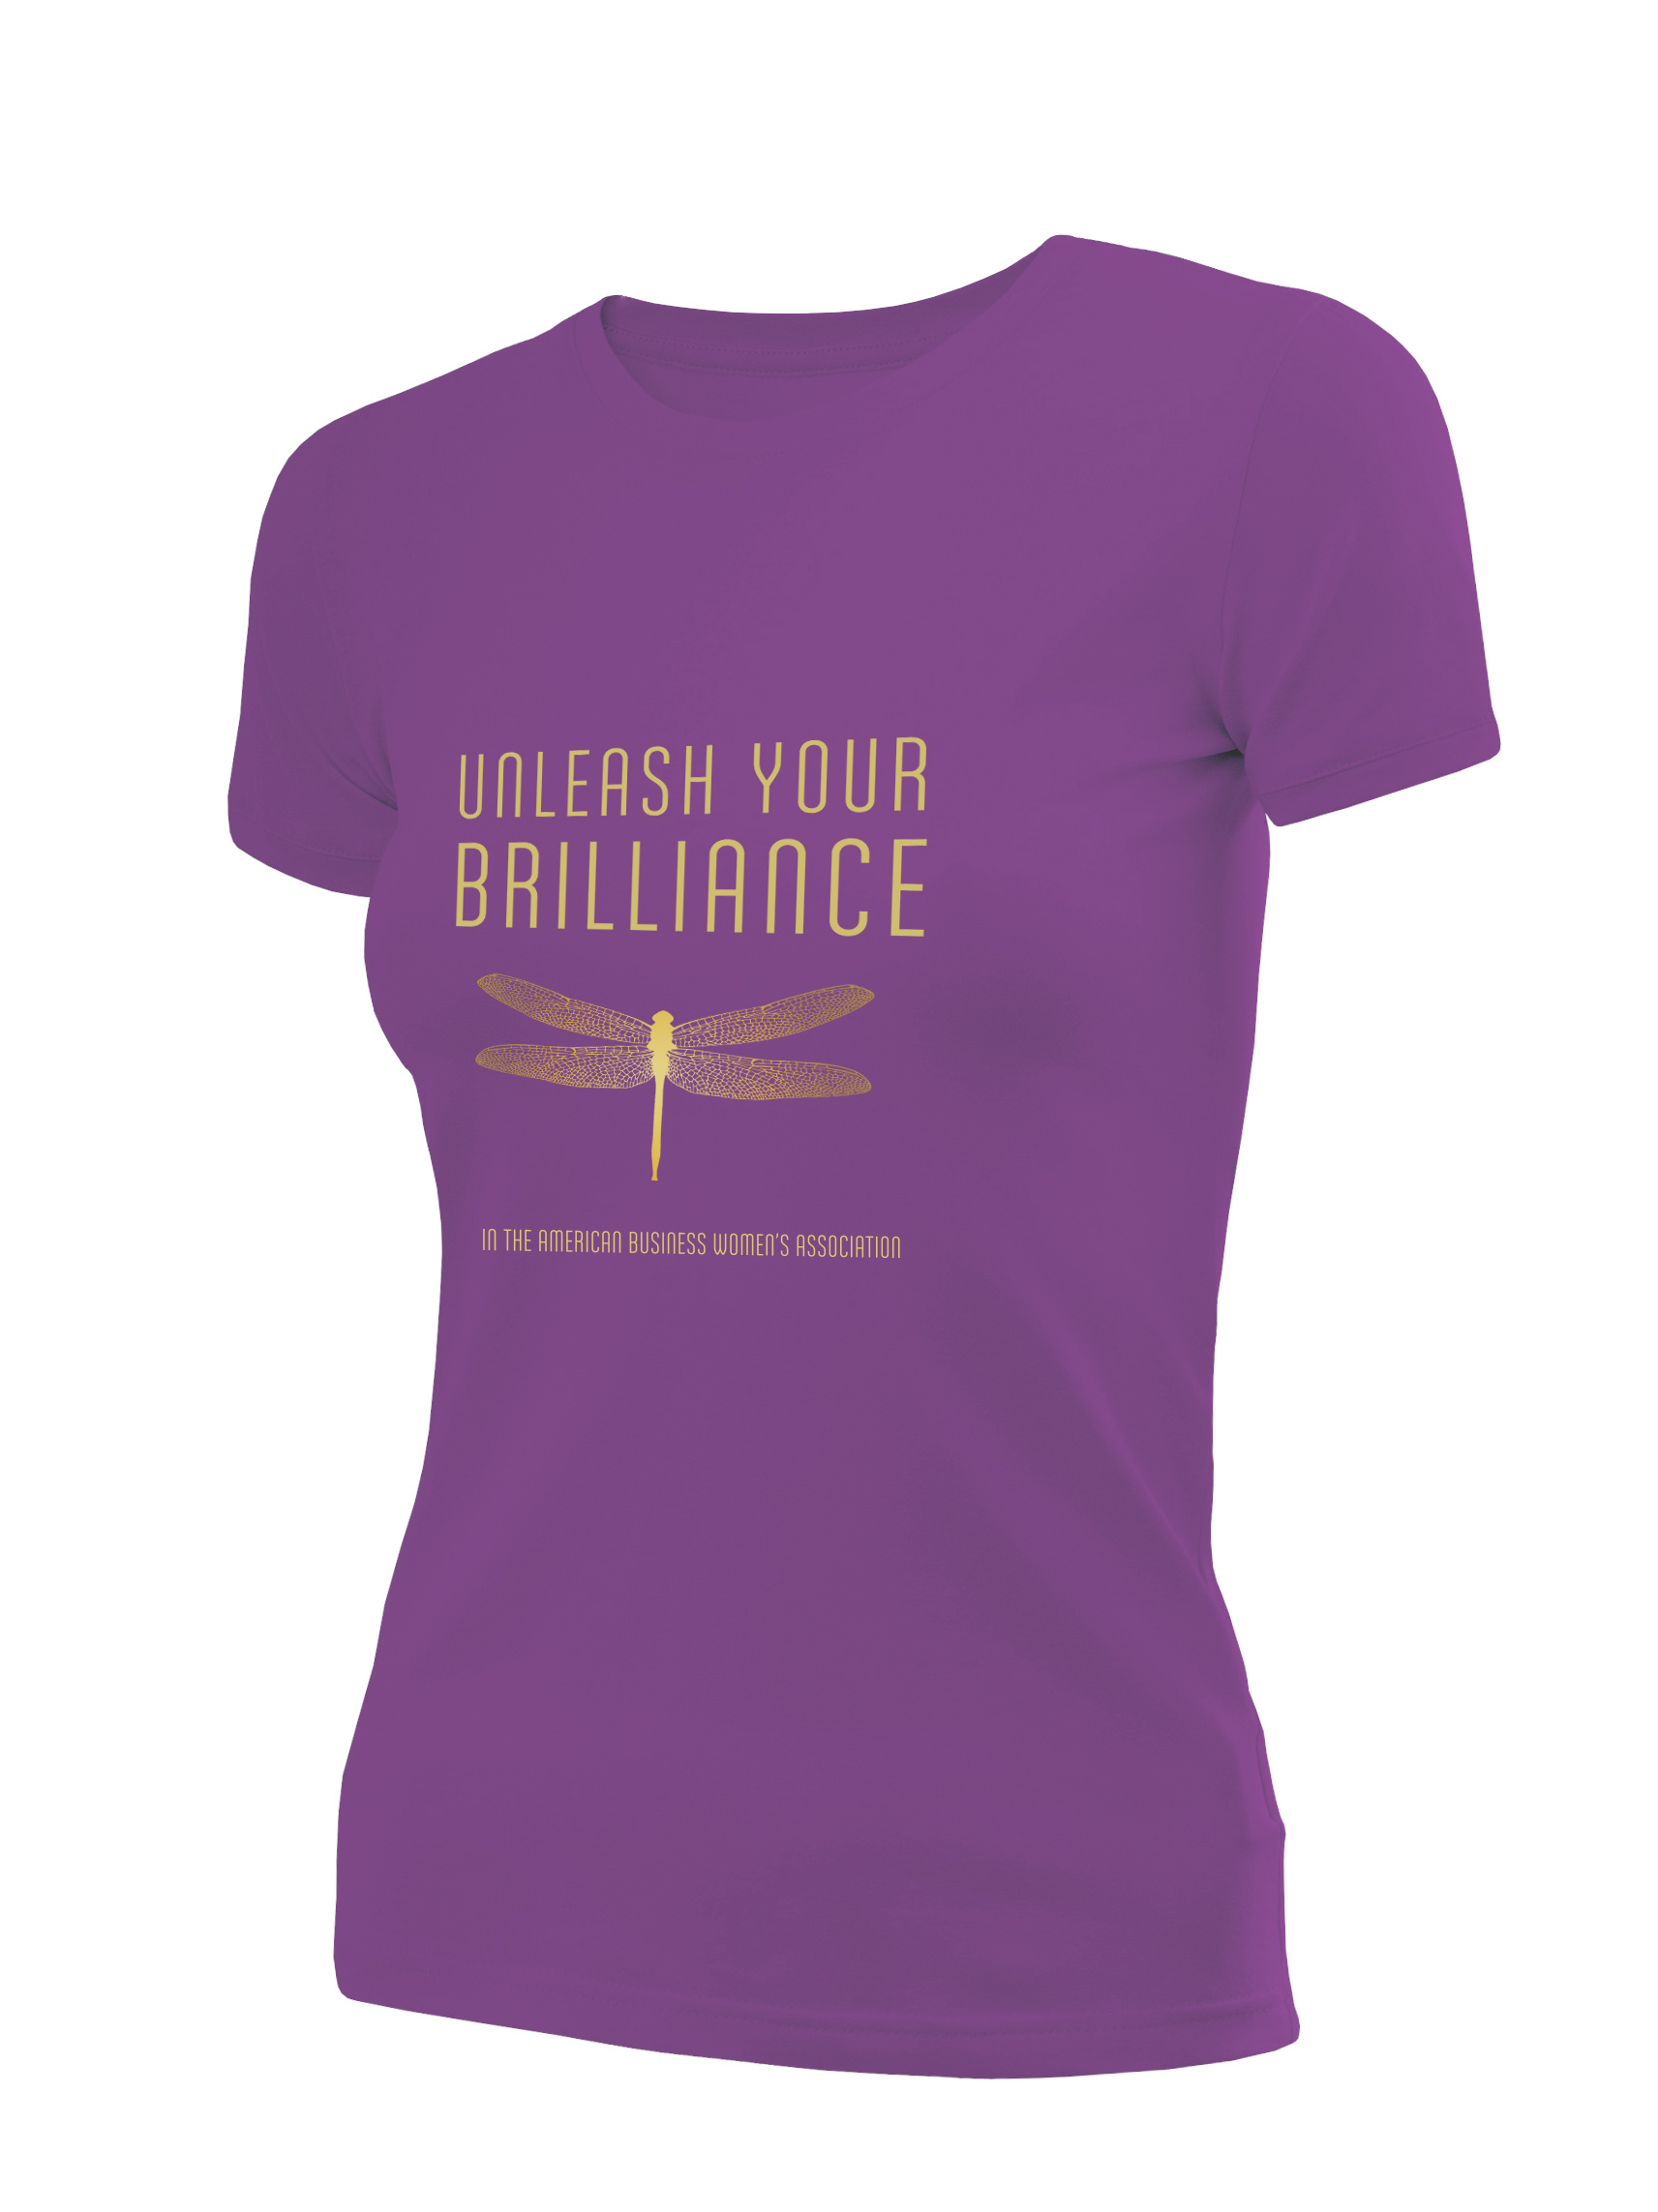 Z 2019 Theme women's purple short sleeve t-shirt Large (this shirt runs small)